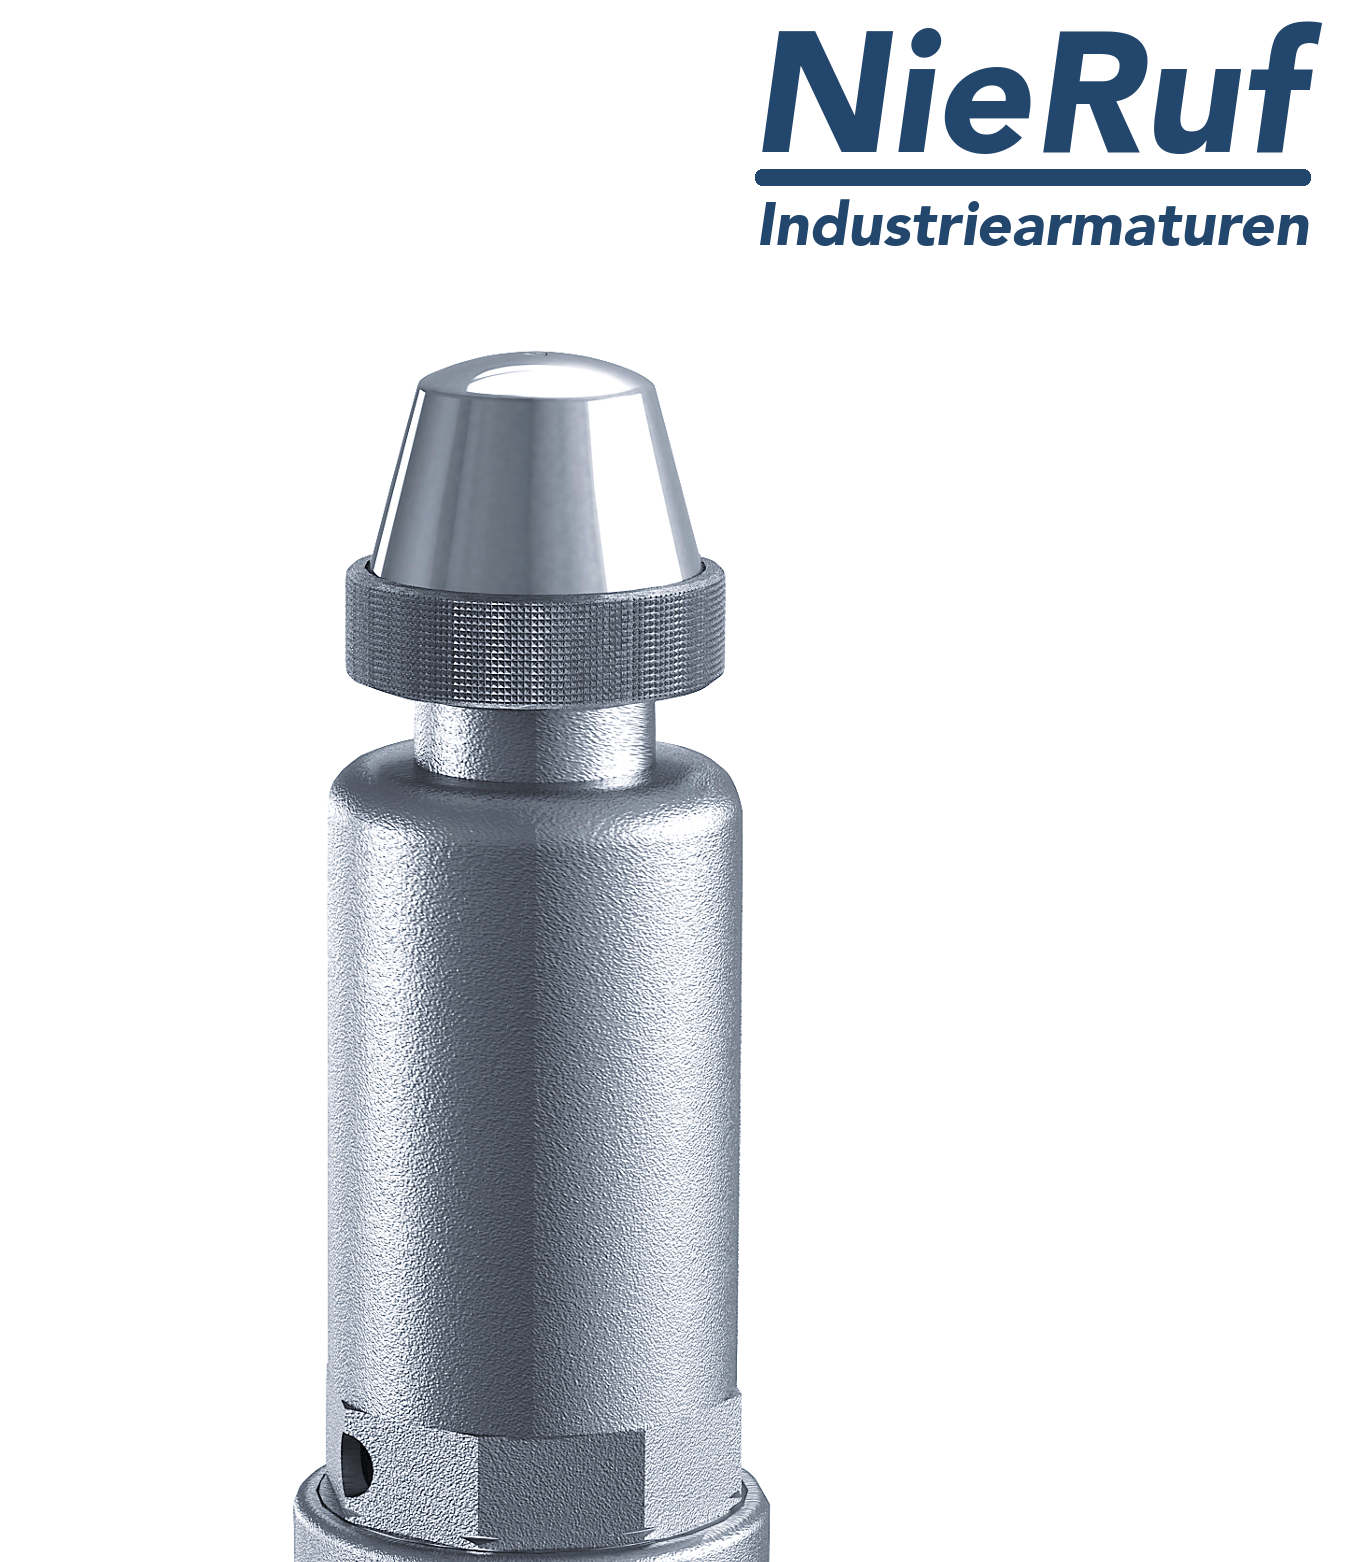 safety valve 2" x 2" fm SV09 neutral gaseous media, stainless steel NBR